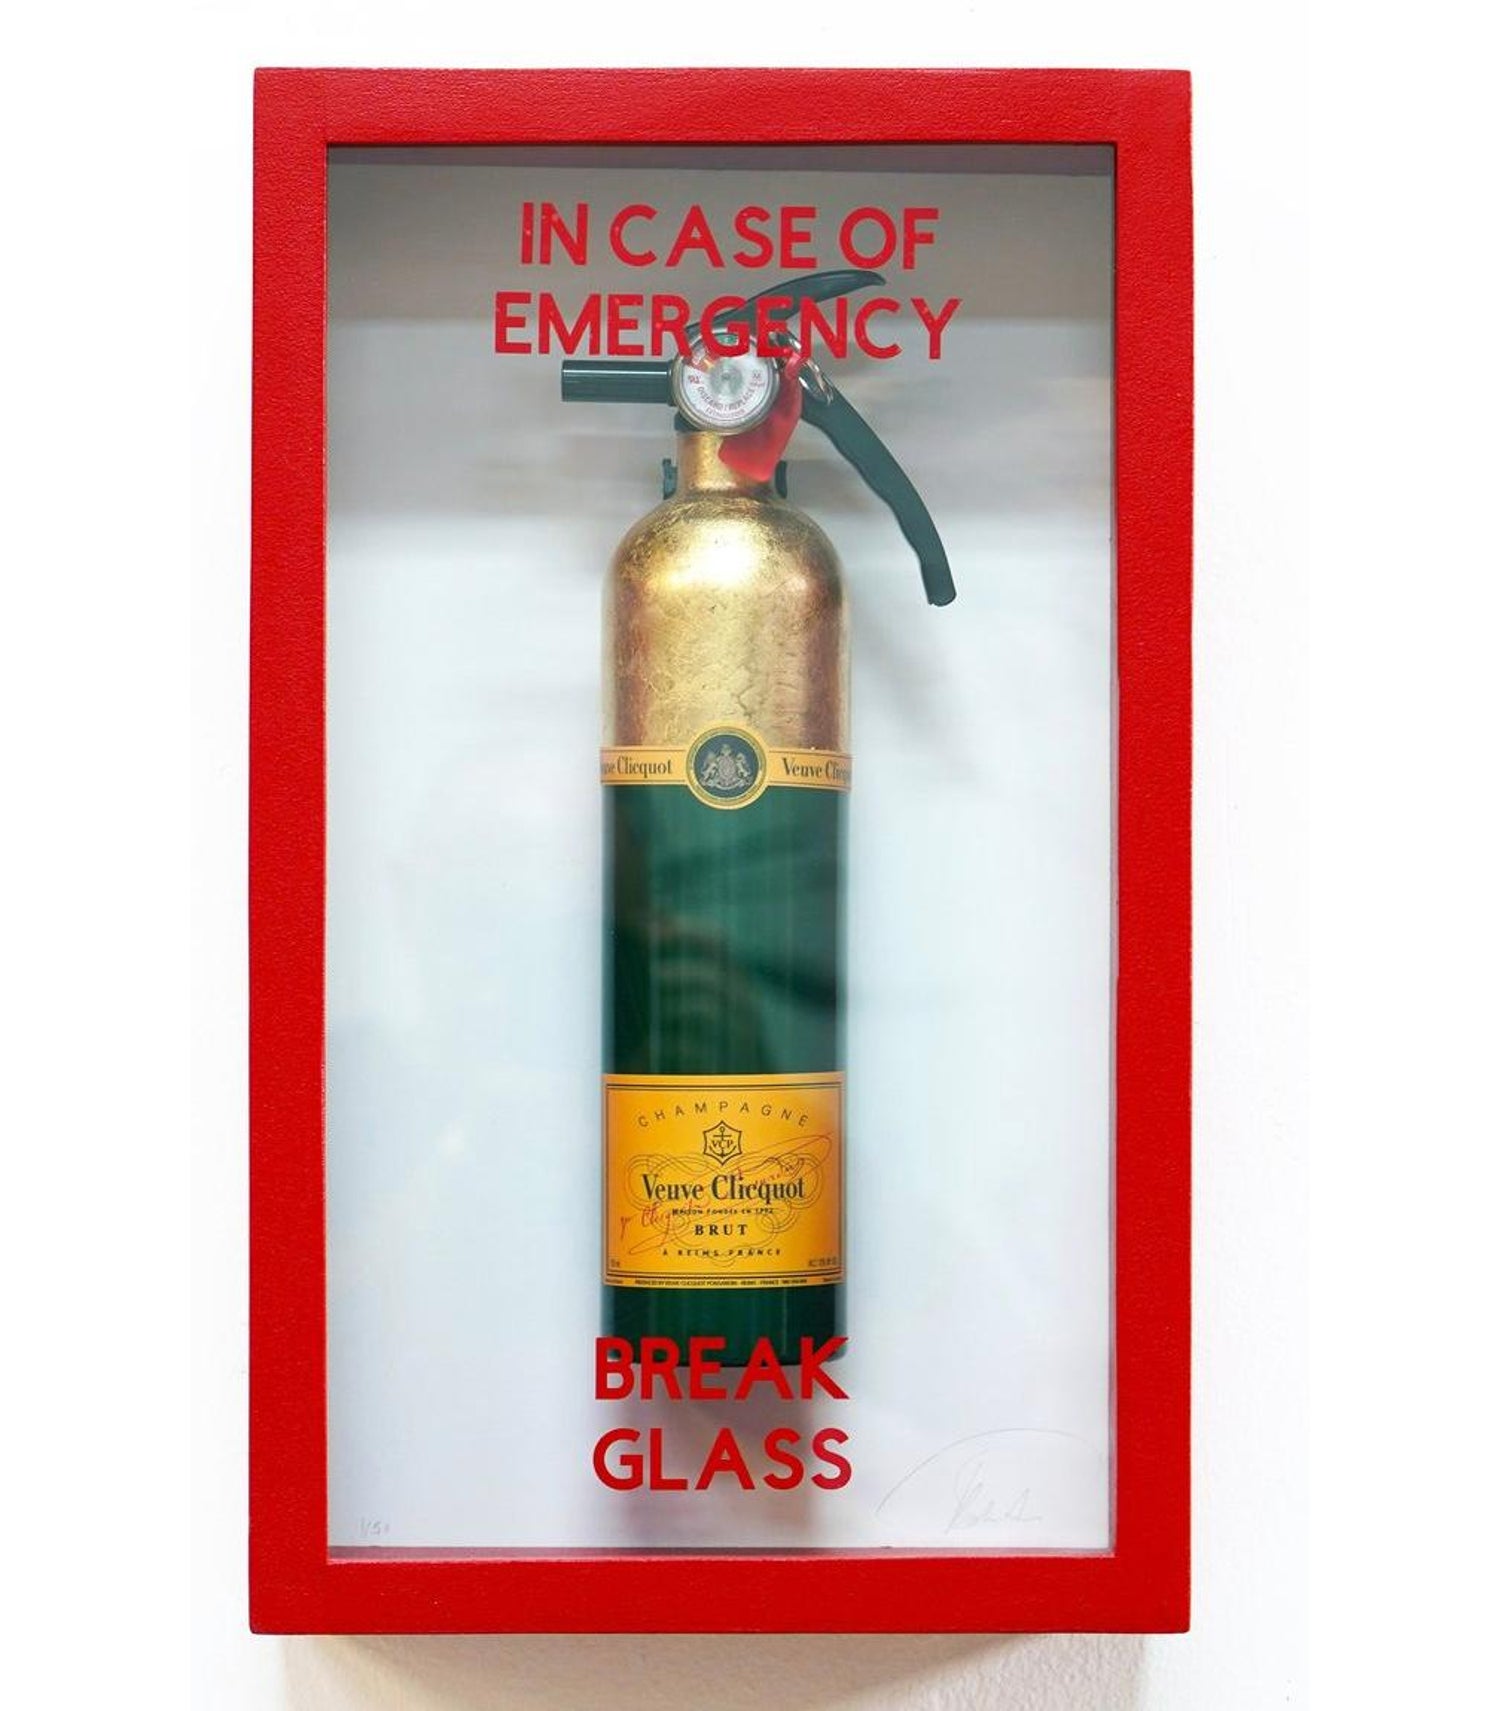 Jesus - "In Case of Emergency Break Glass"Veuve Clicquot Midi Edition Fire at 1stDibs